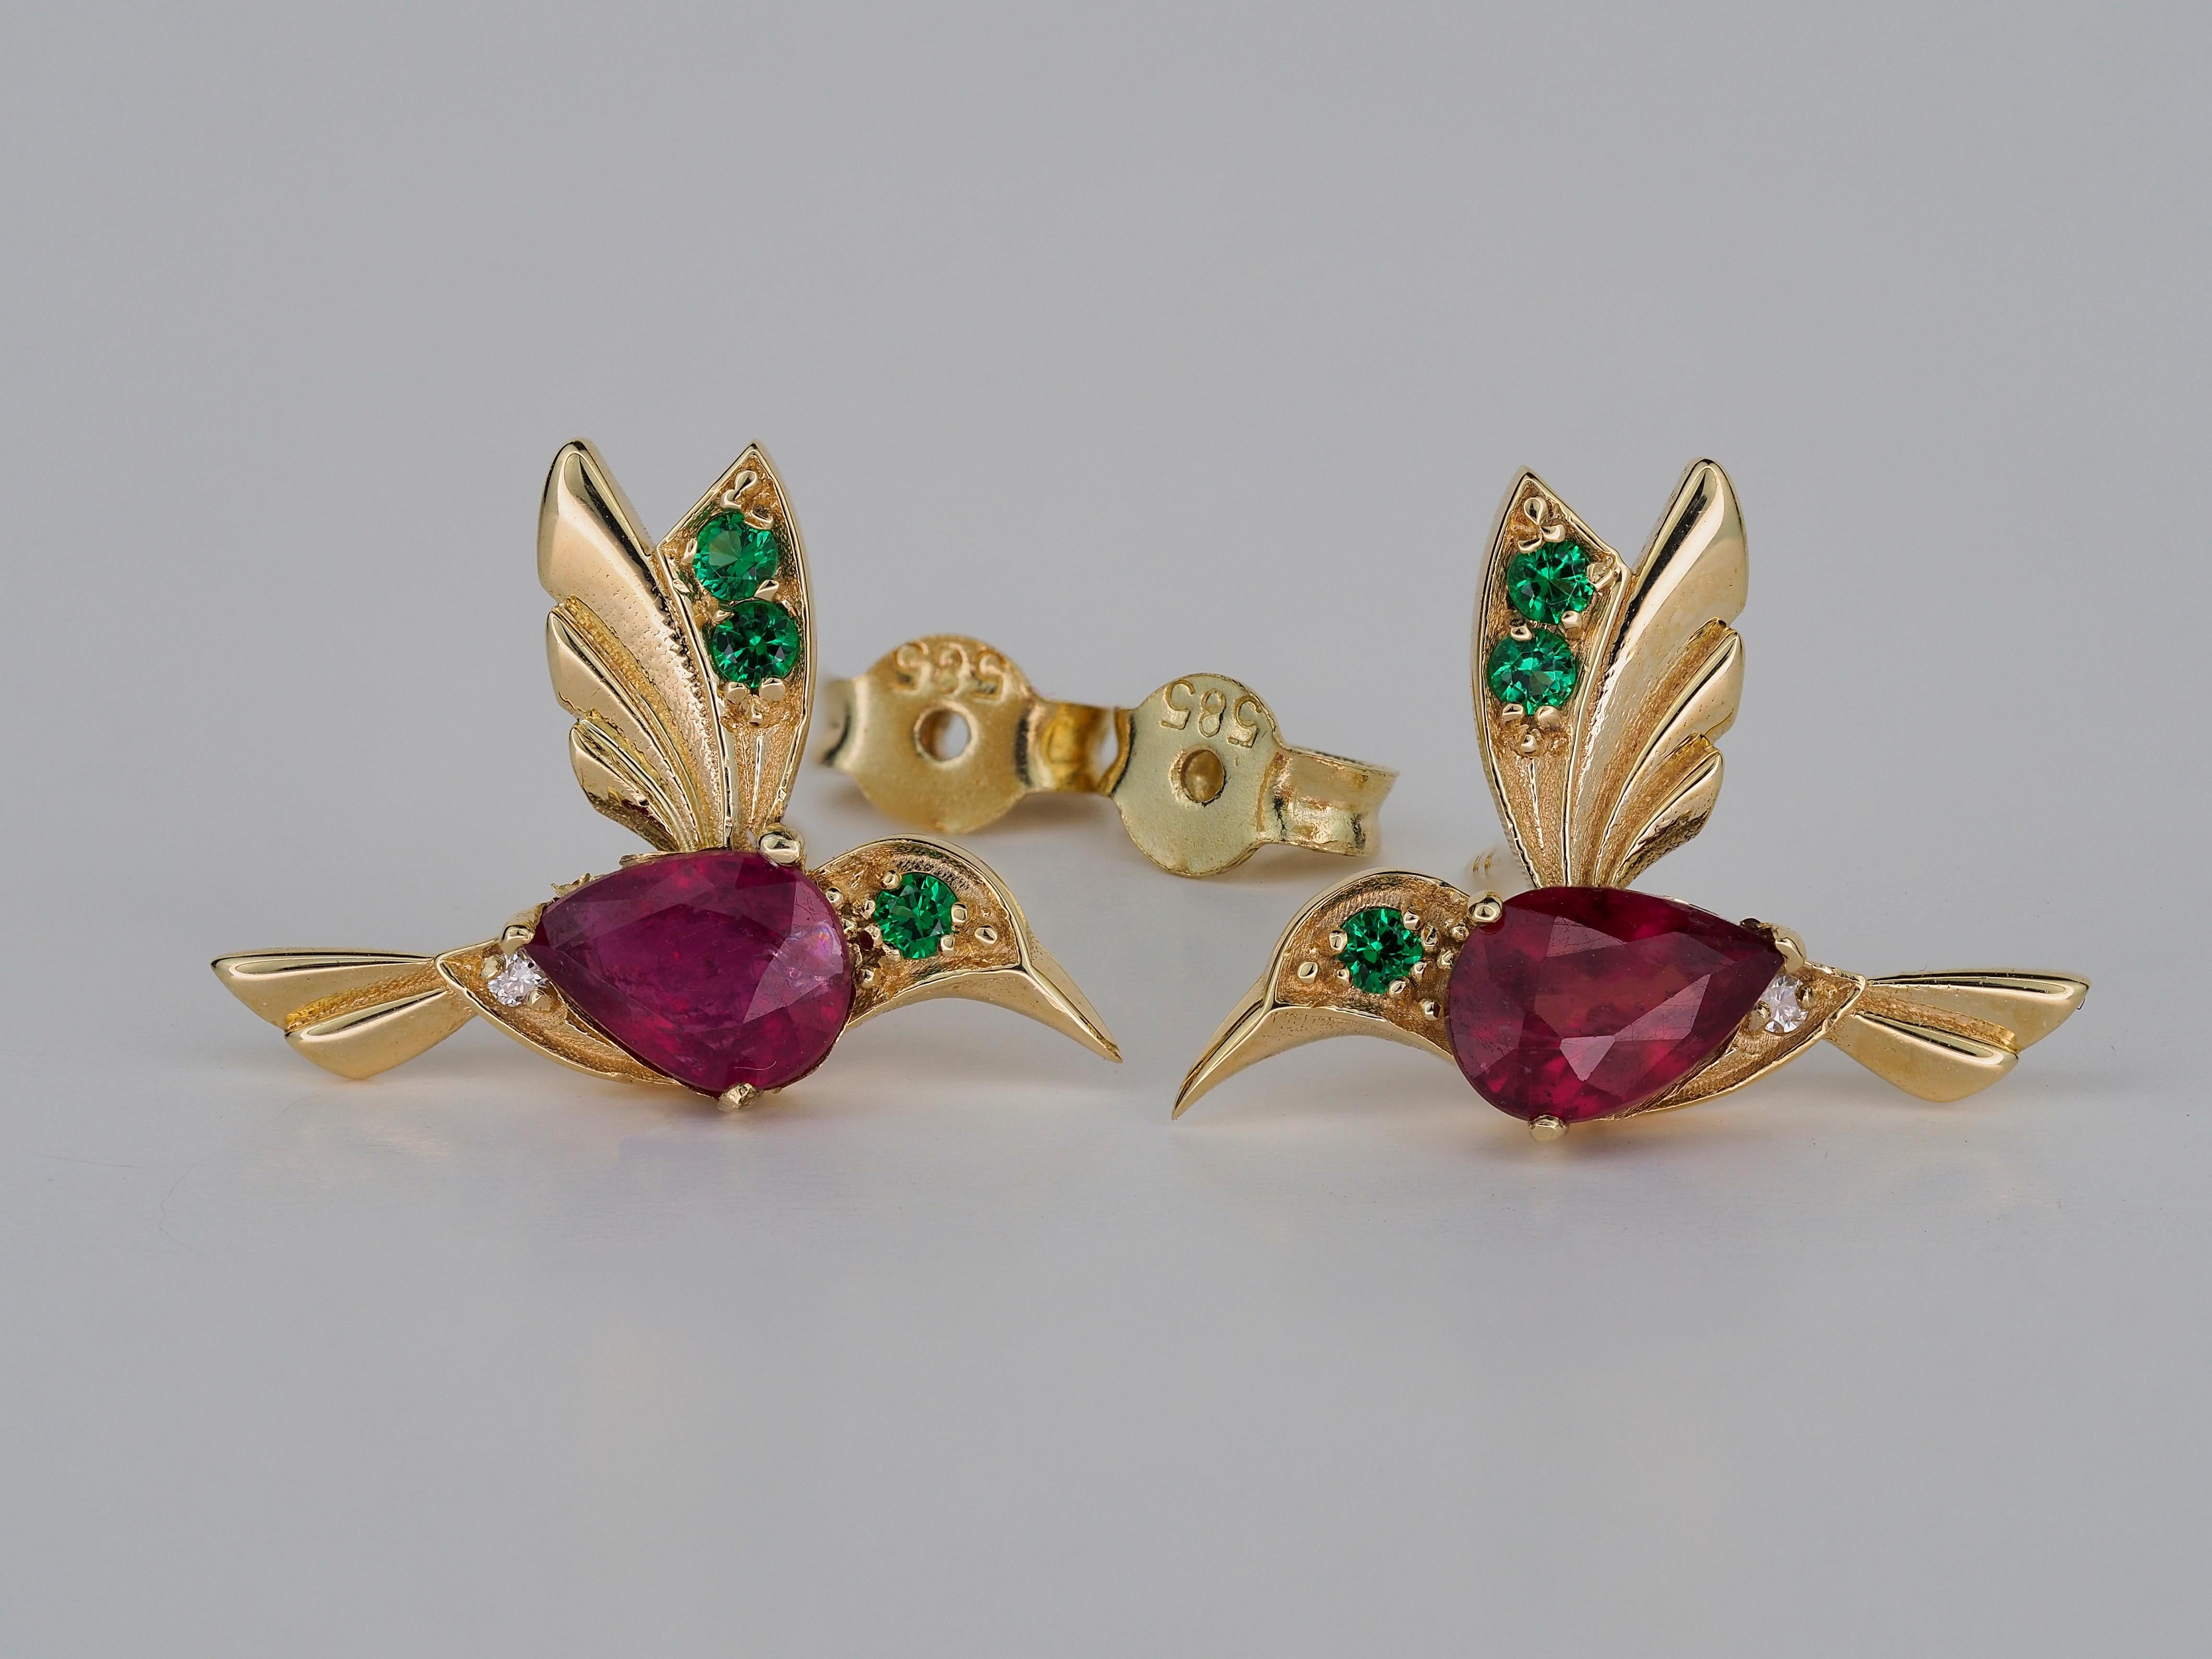 14k Gold Hummingbird Earings Studs with Rubies, Bird Stud Earrings with Gems ! 5